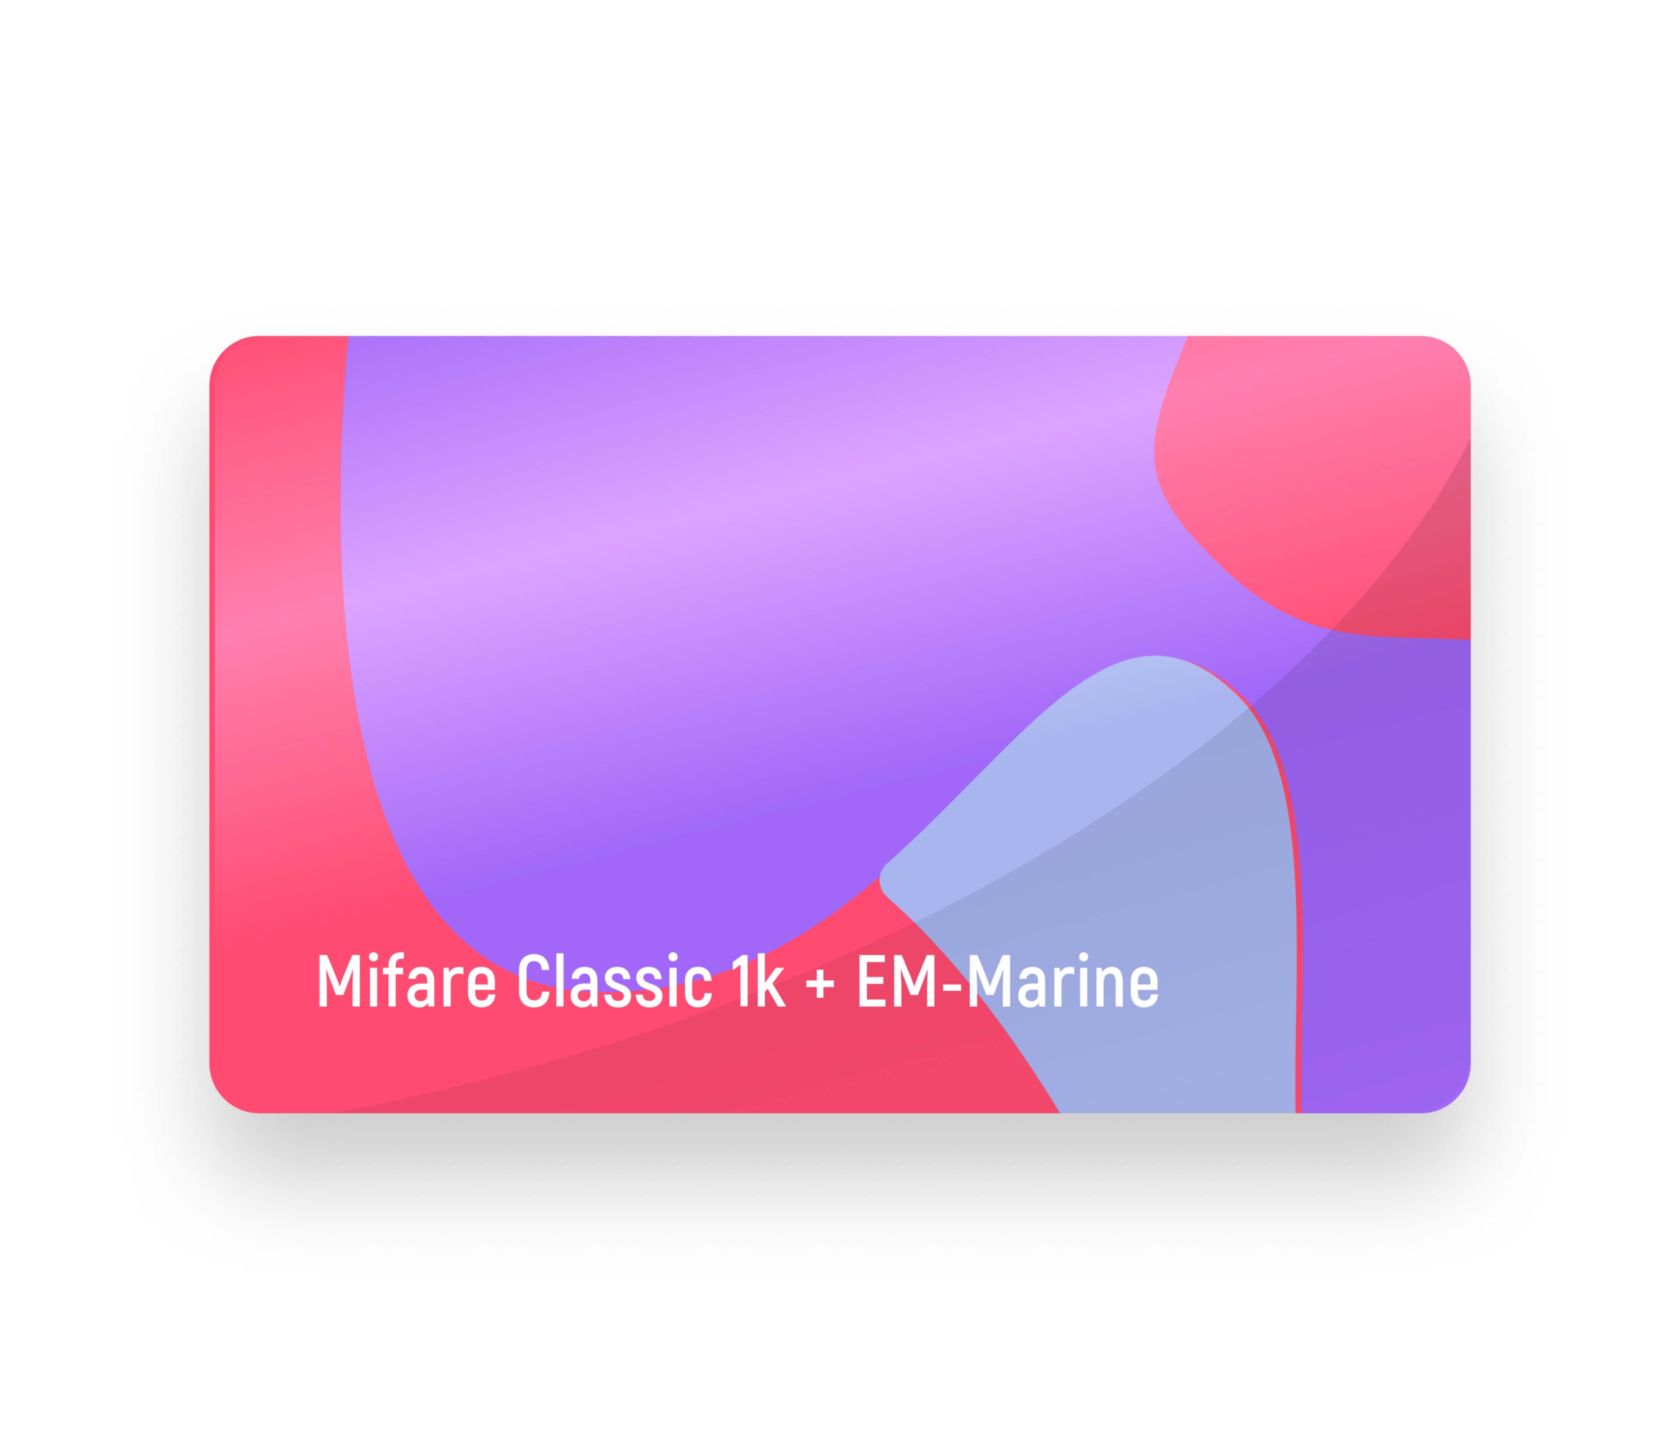 Mifare Classic 1k + EM-Marine